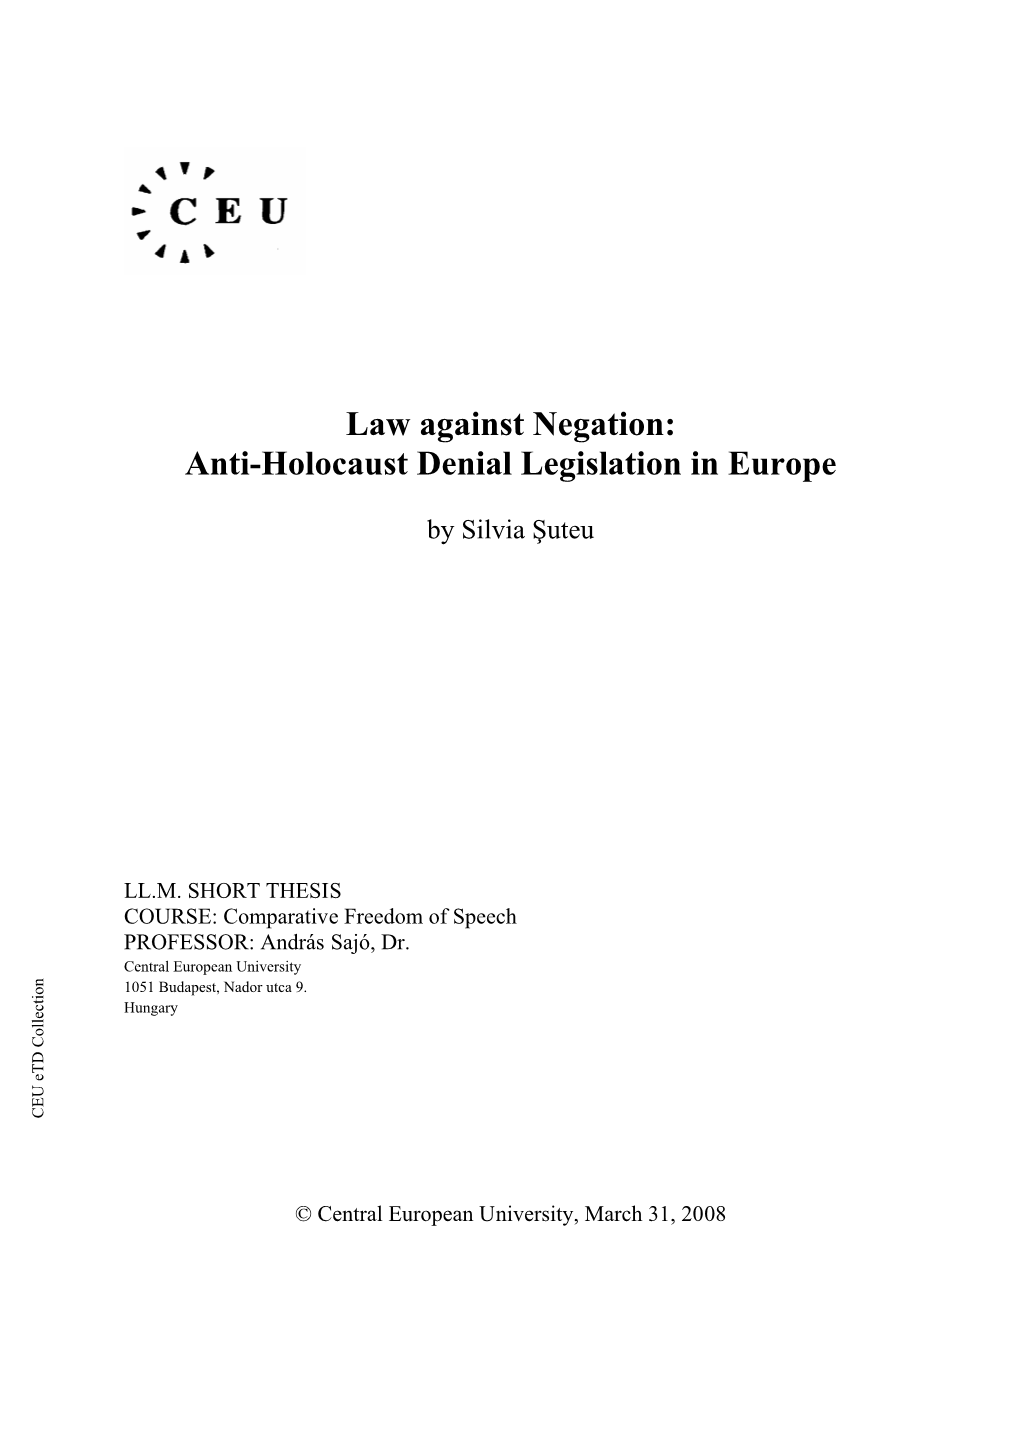 Anti-Holocaust Denial Legislation in Europe